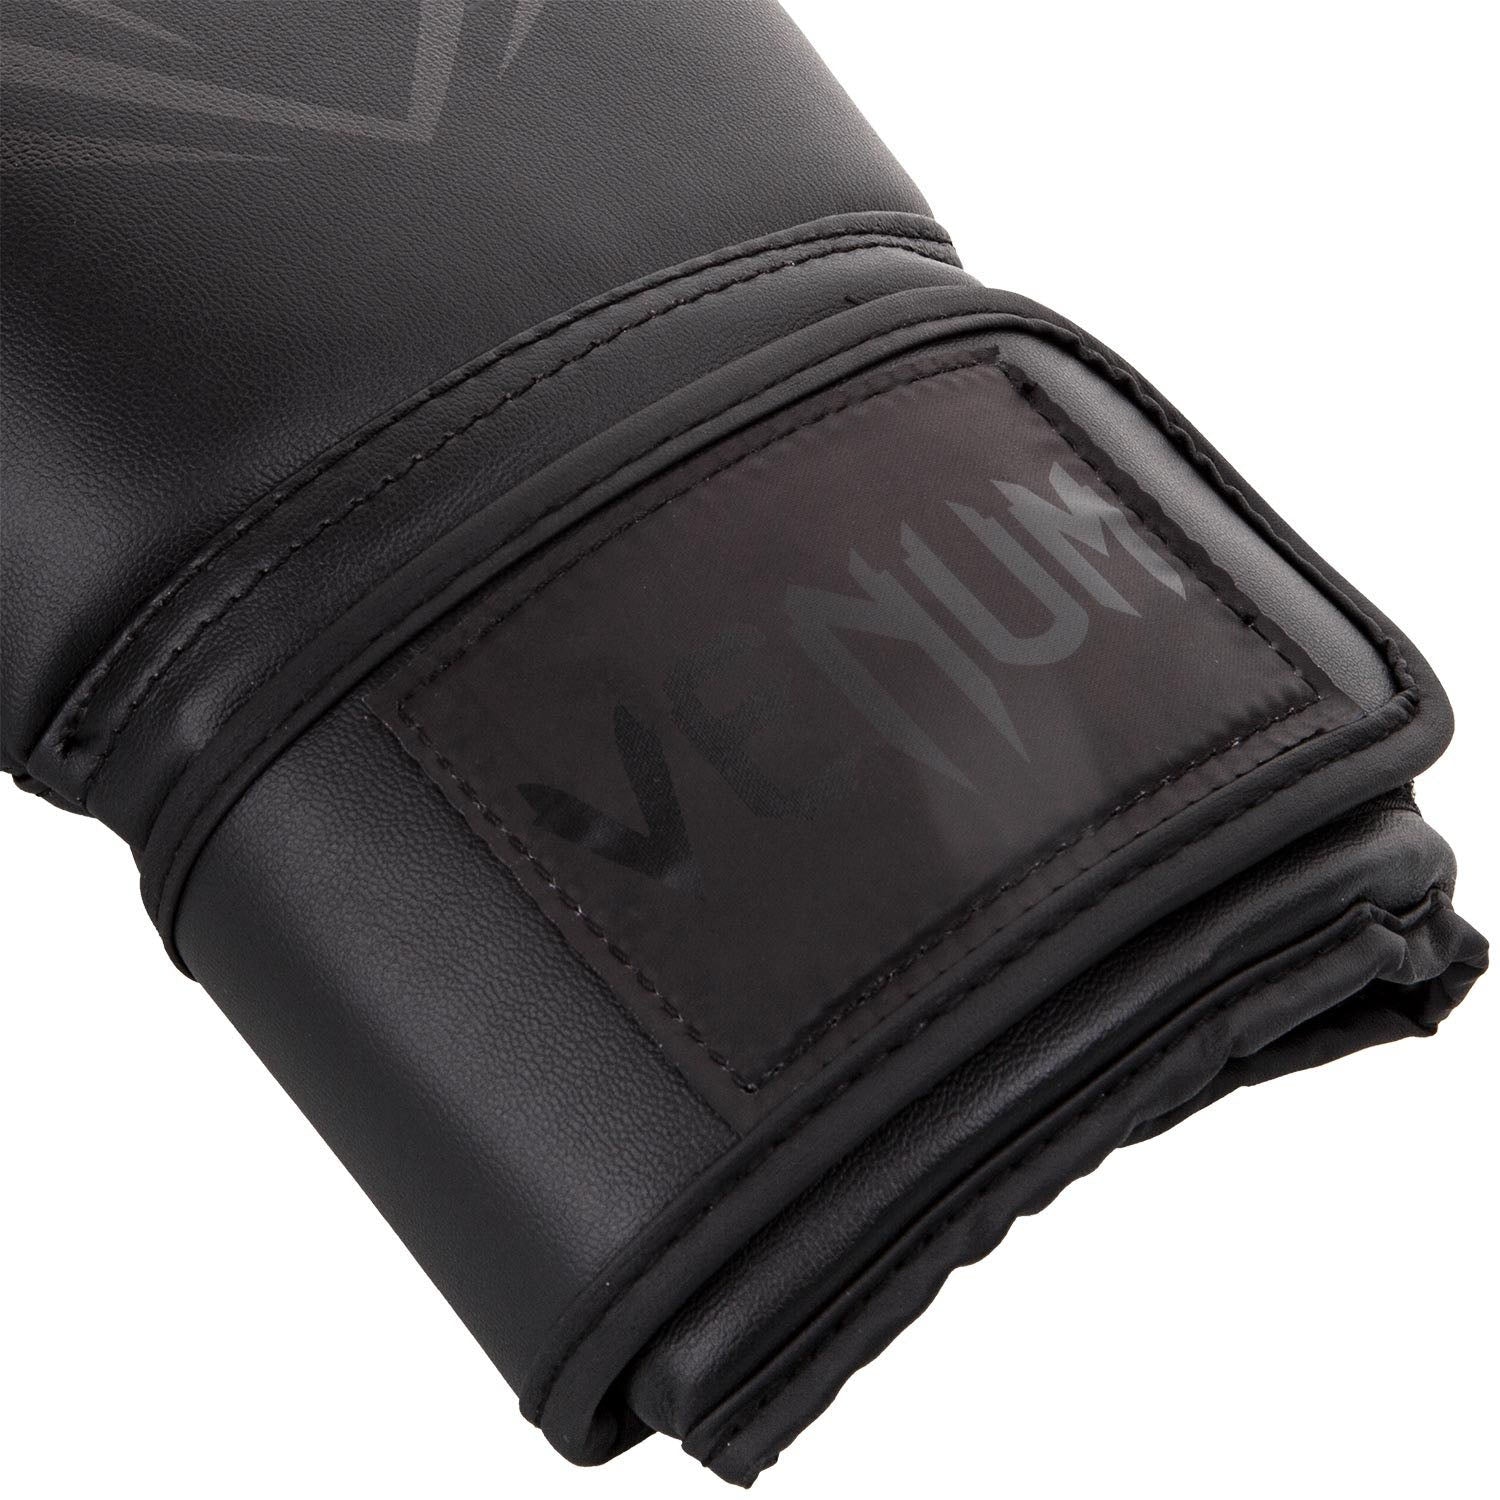 Venum Contender Boxing Gloves,16 Oz - Best Price online Prokicksports.com